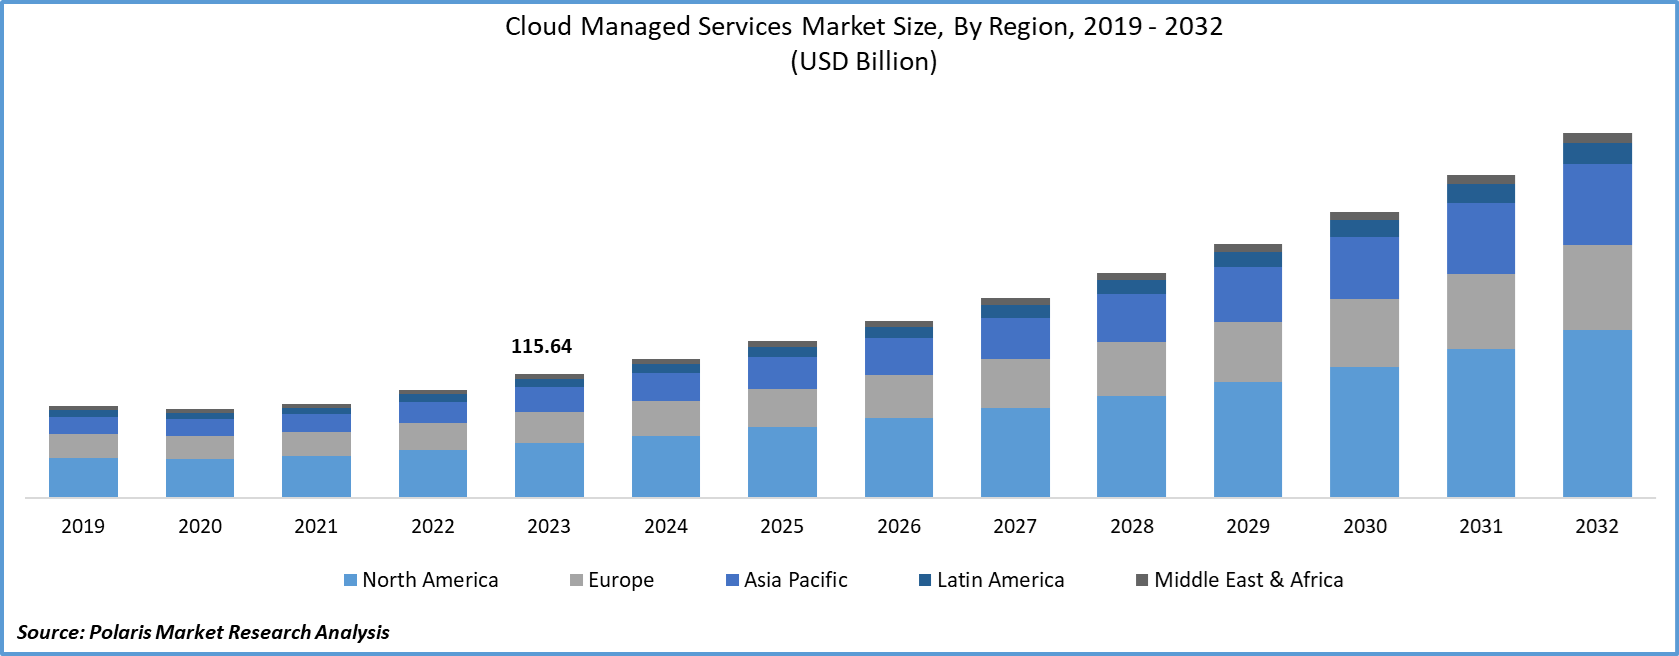 Cloud Managed Services Market Size